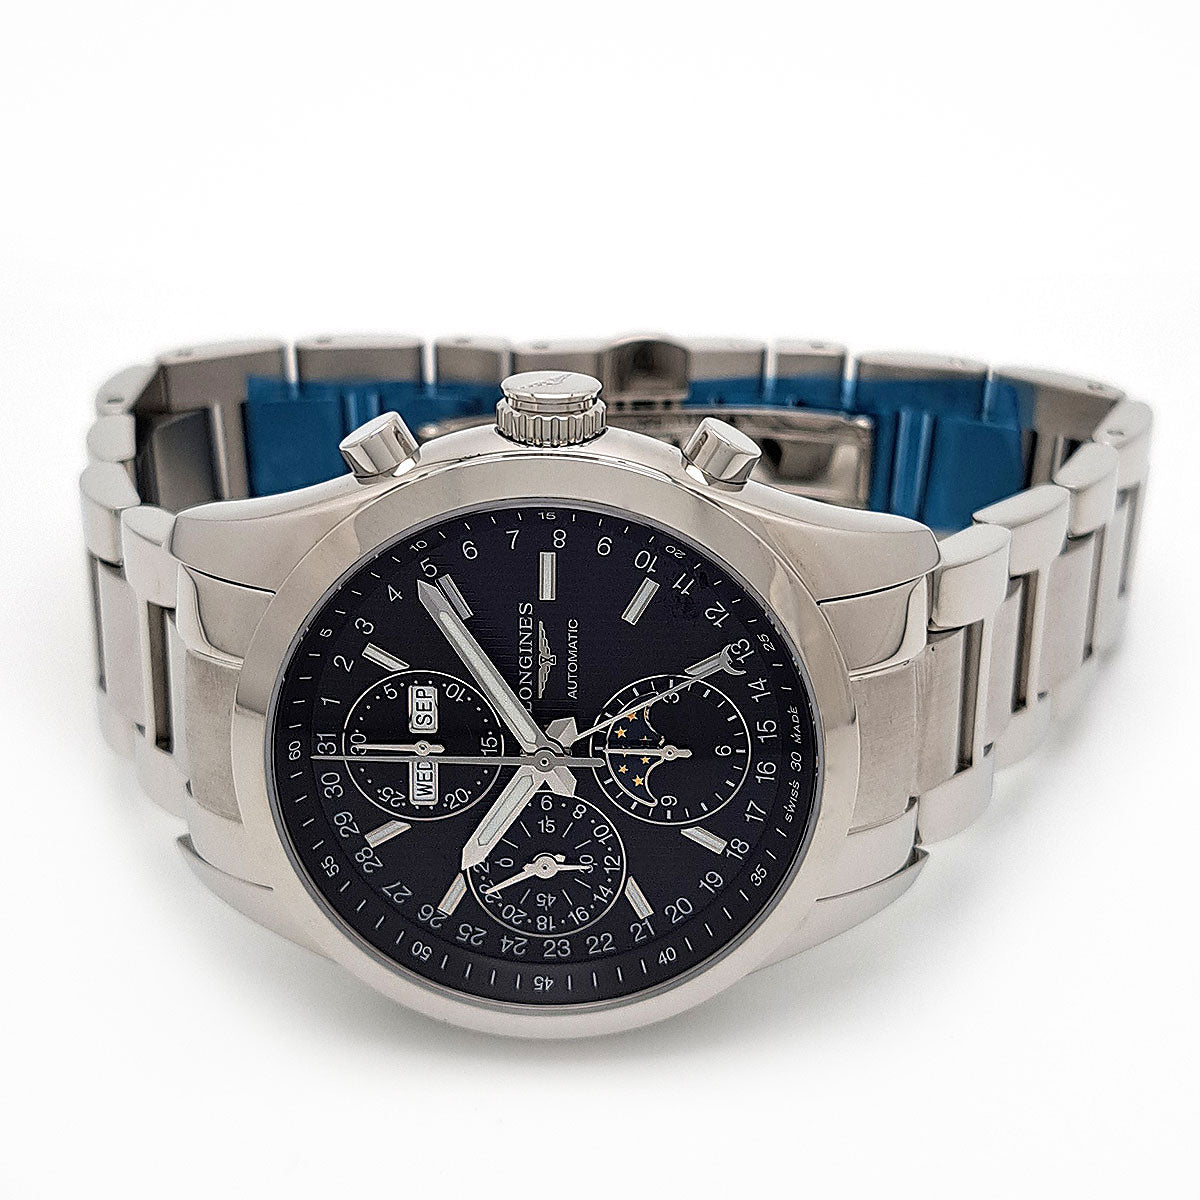 Automatic Conquest Classic Chronograph Wrist Watch  L2.798.4